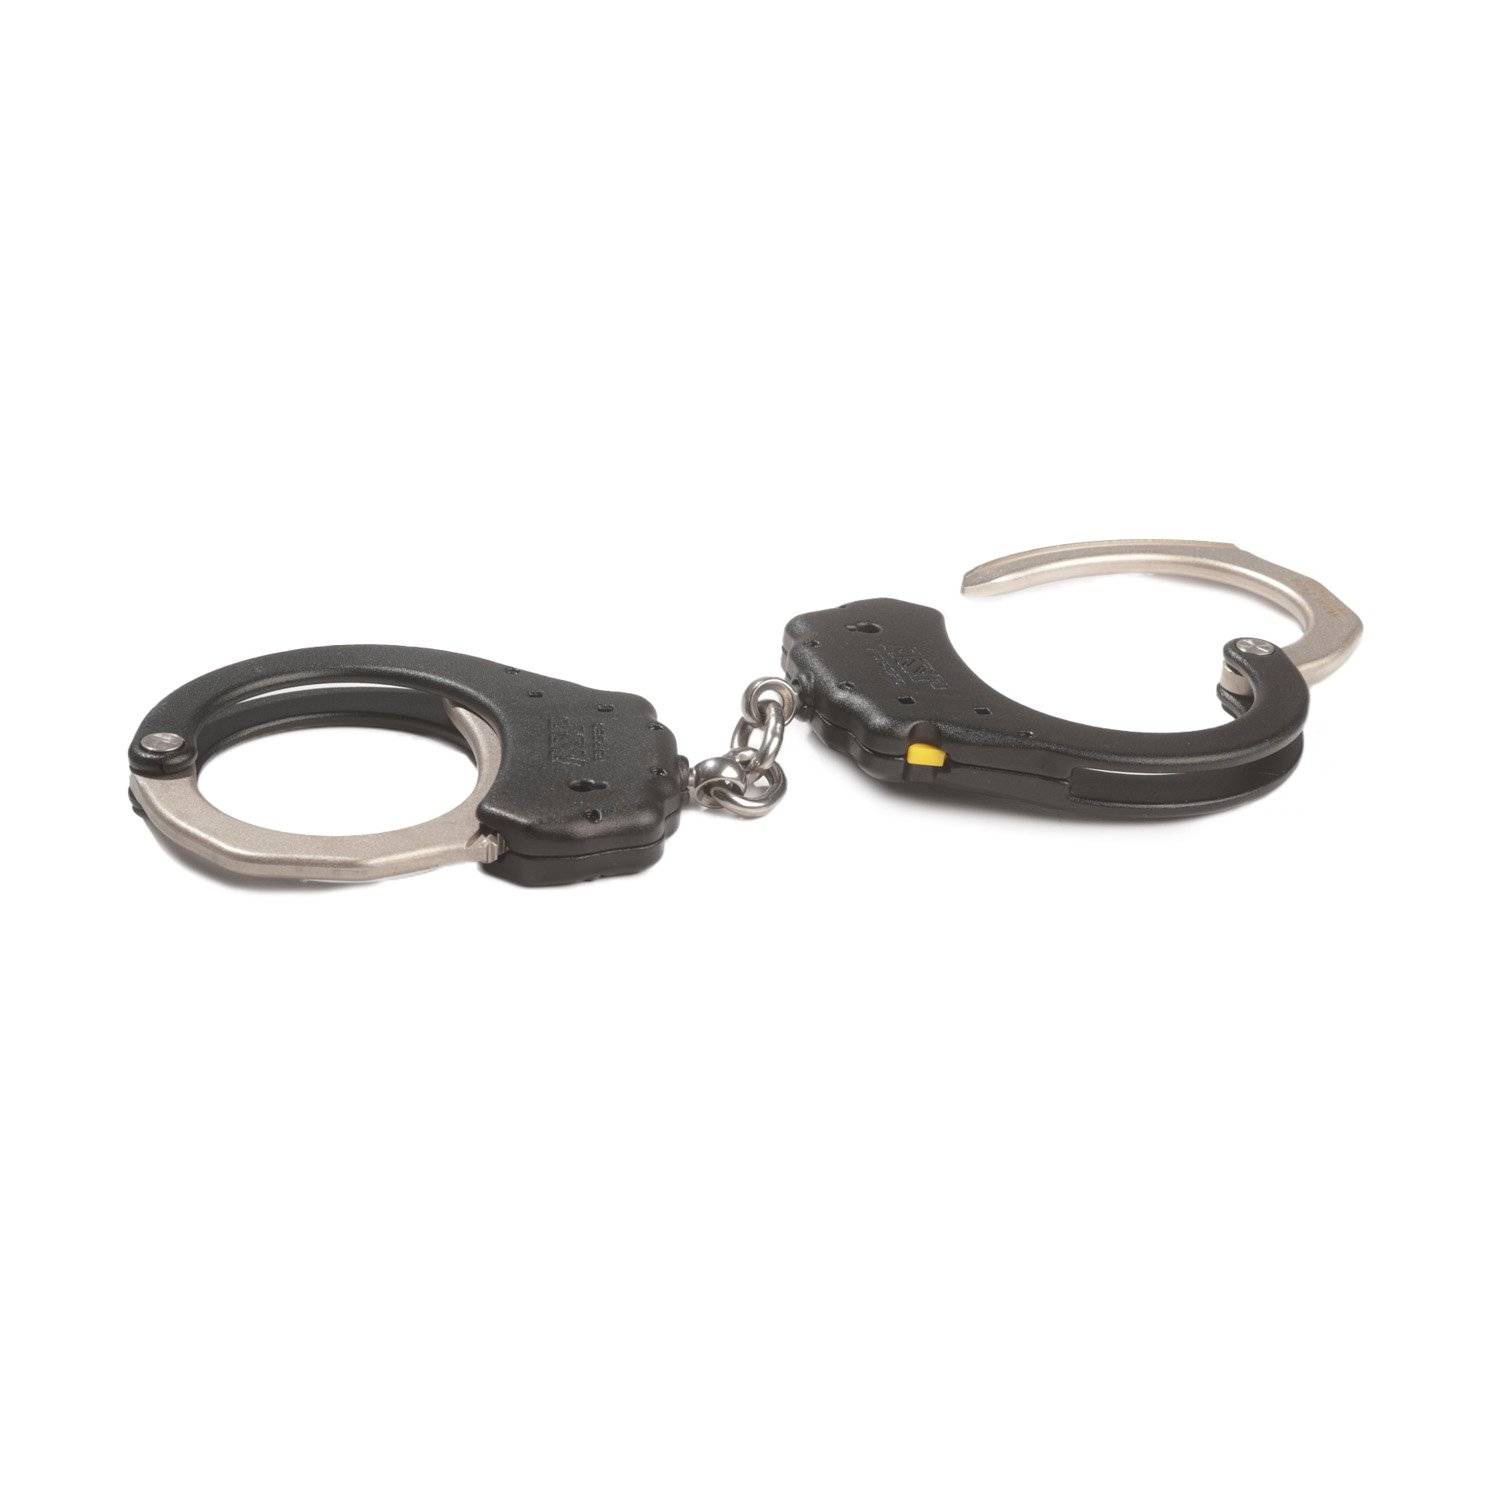 ASP Ultra Plus Chain Handcuffs (Steel Bow)